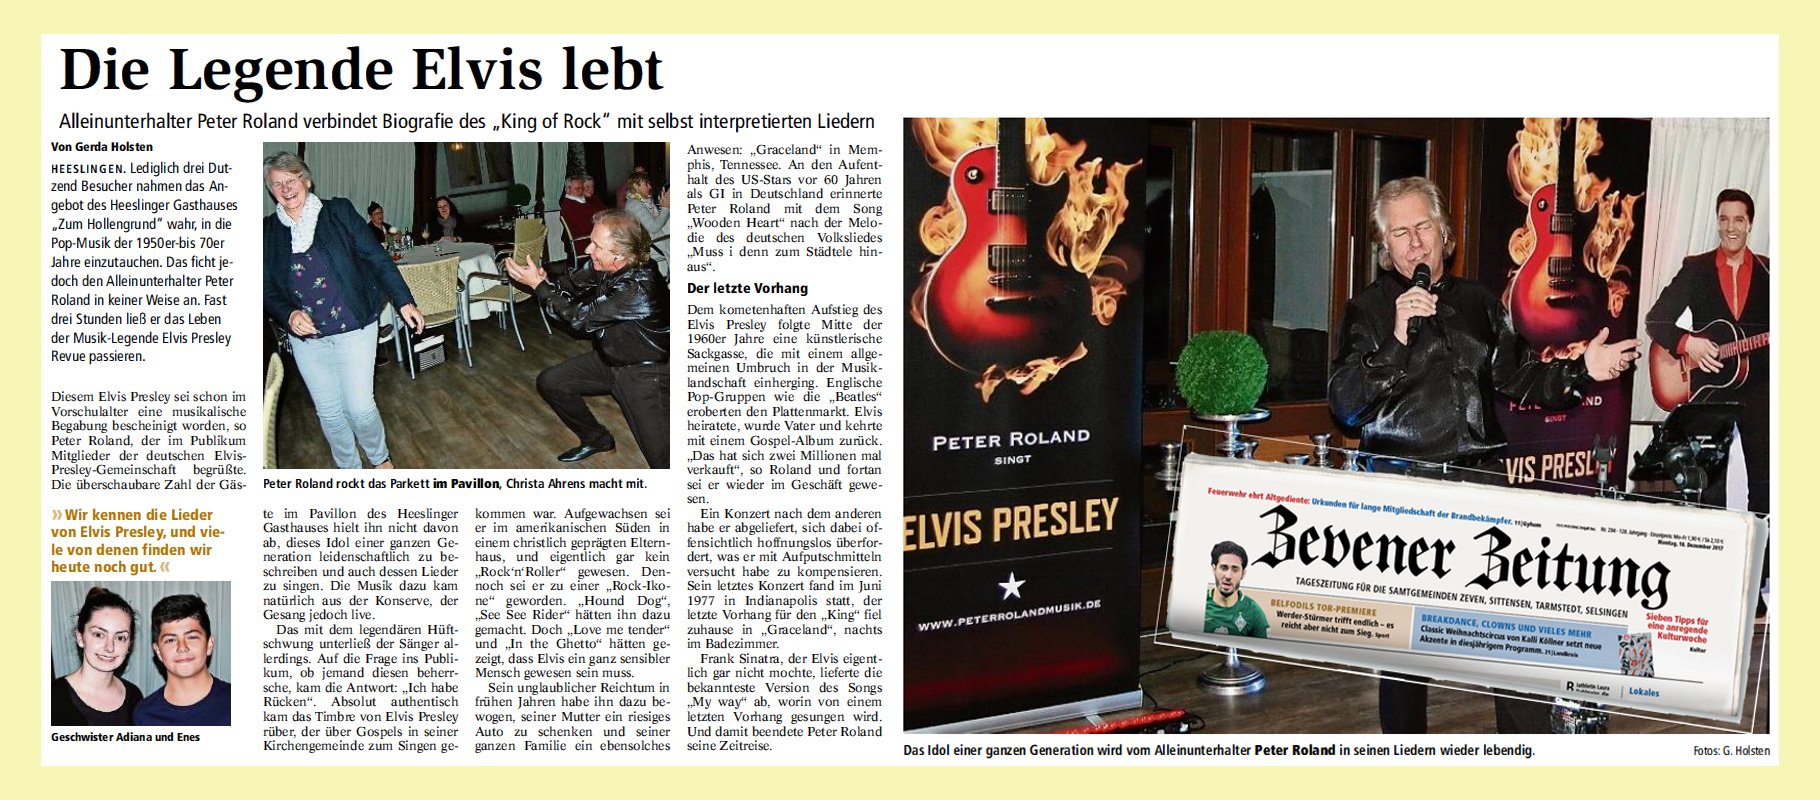 Zevener Zeitung 2018-11-05 Die Legende Elvis lebt; Peter Roland